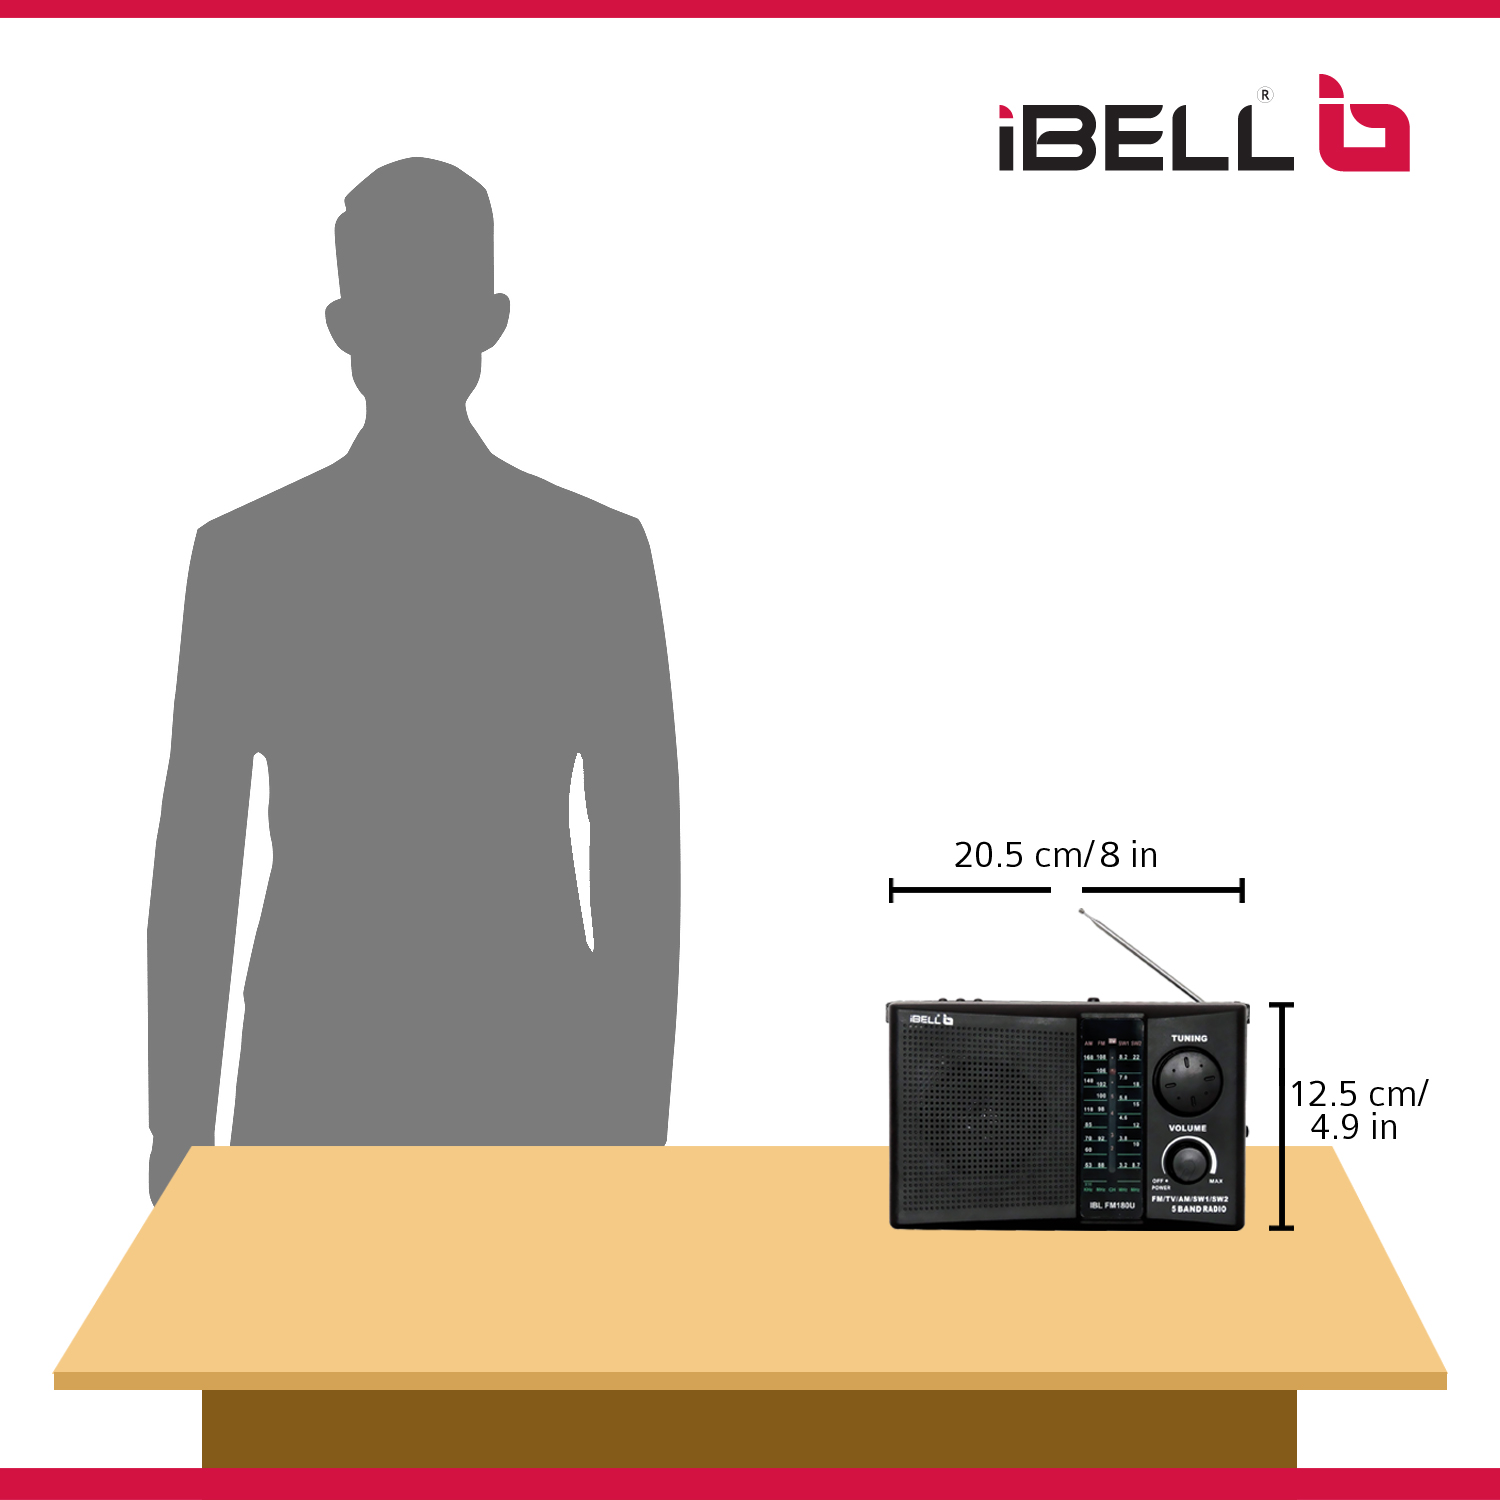 Ibell fm700bt portable fm radio with bluetooth speaker usbsdmp3